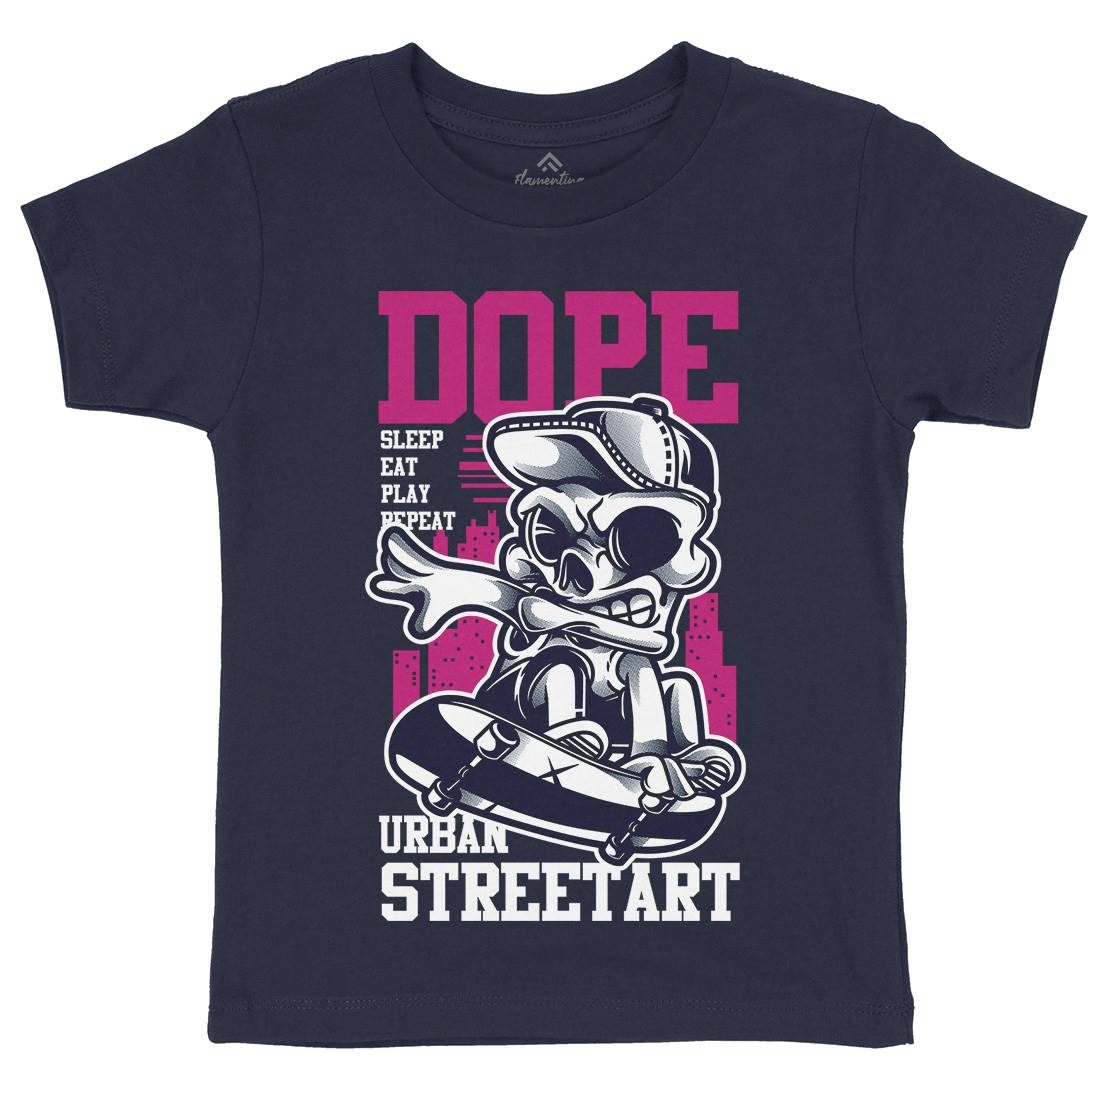 Dope Kids Organic Crew Neck T-Shirt Skate D758